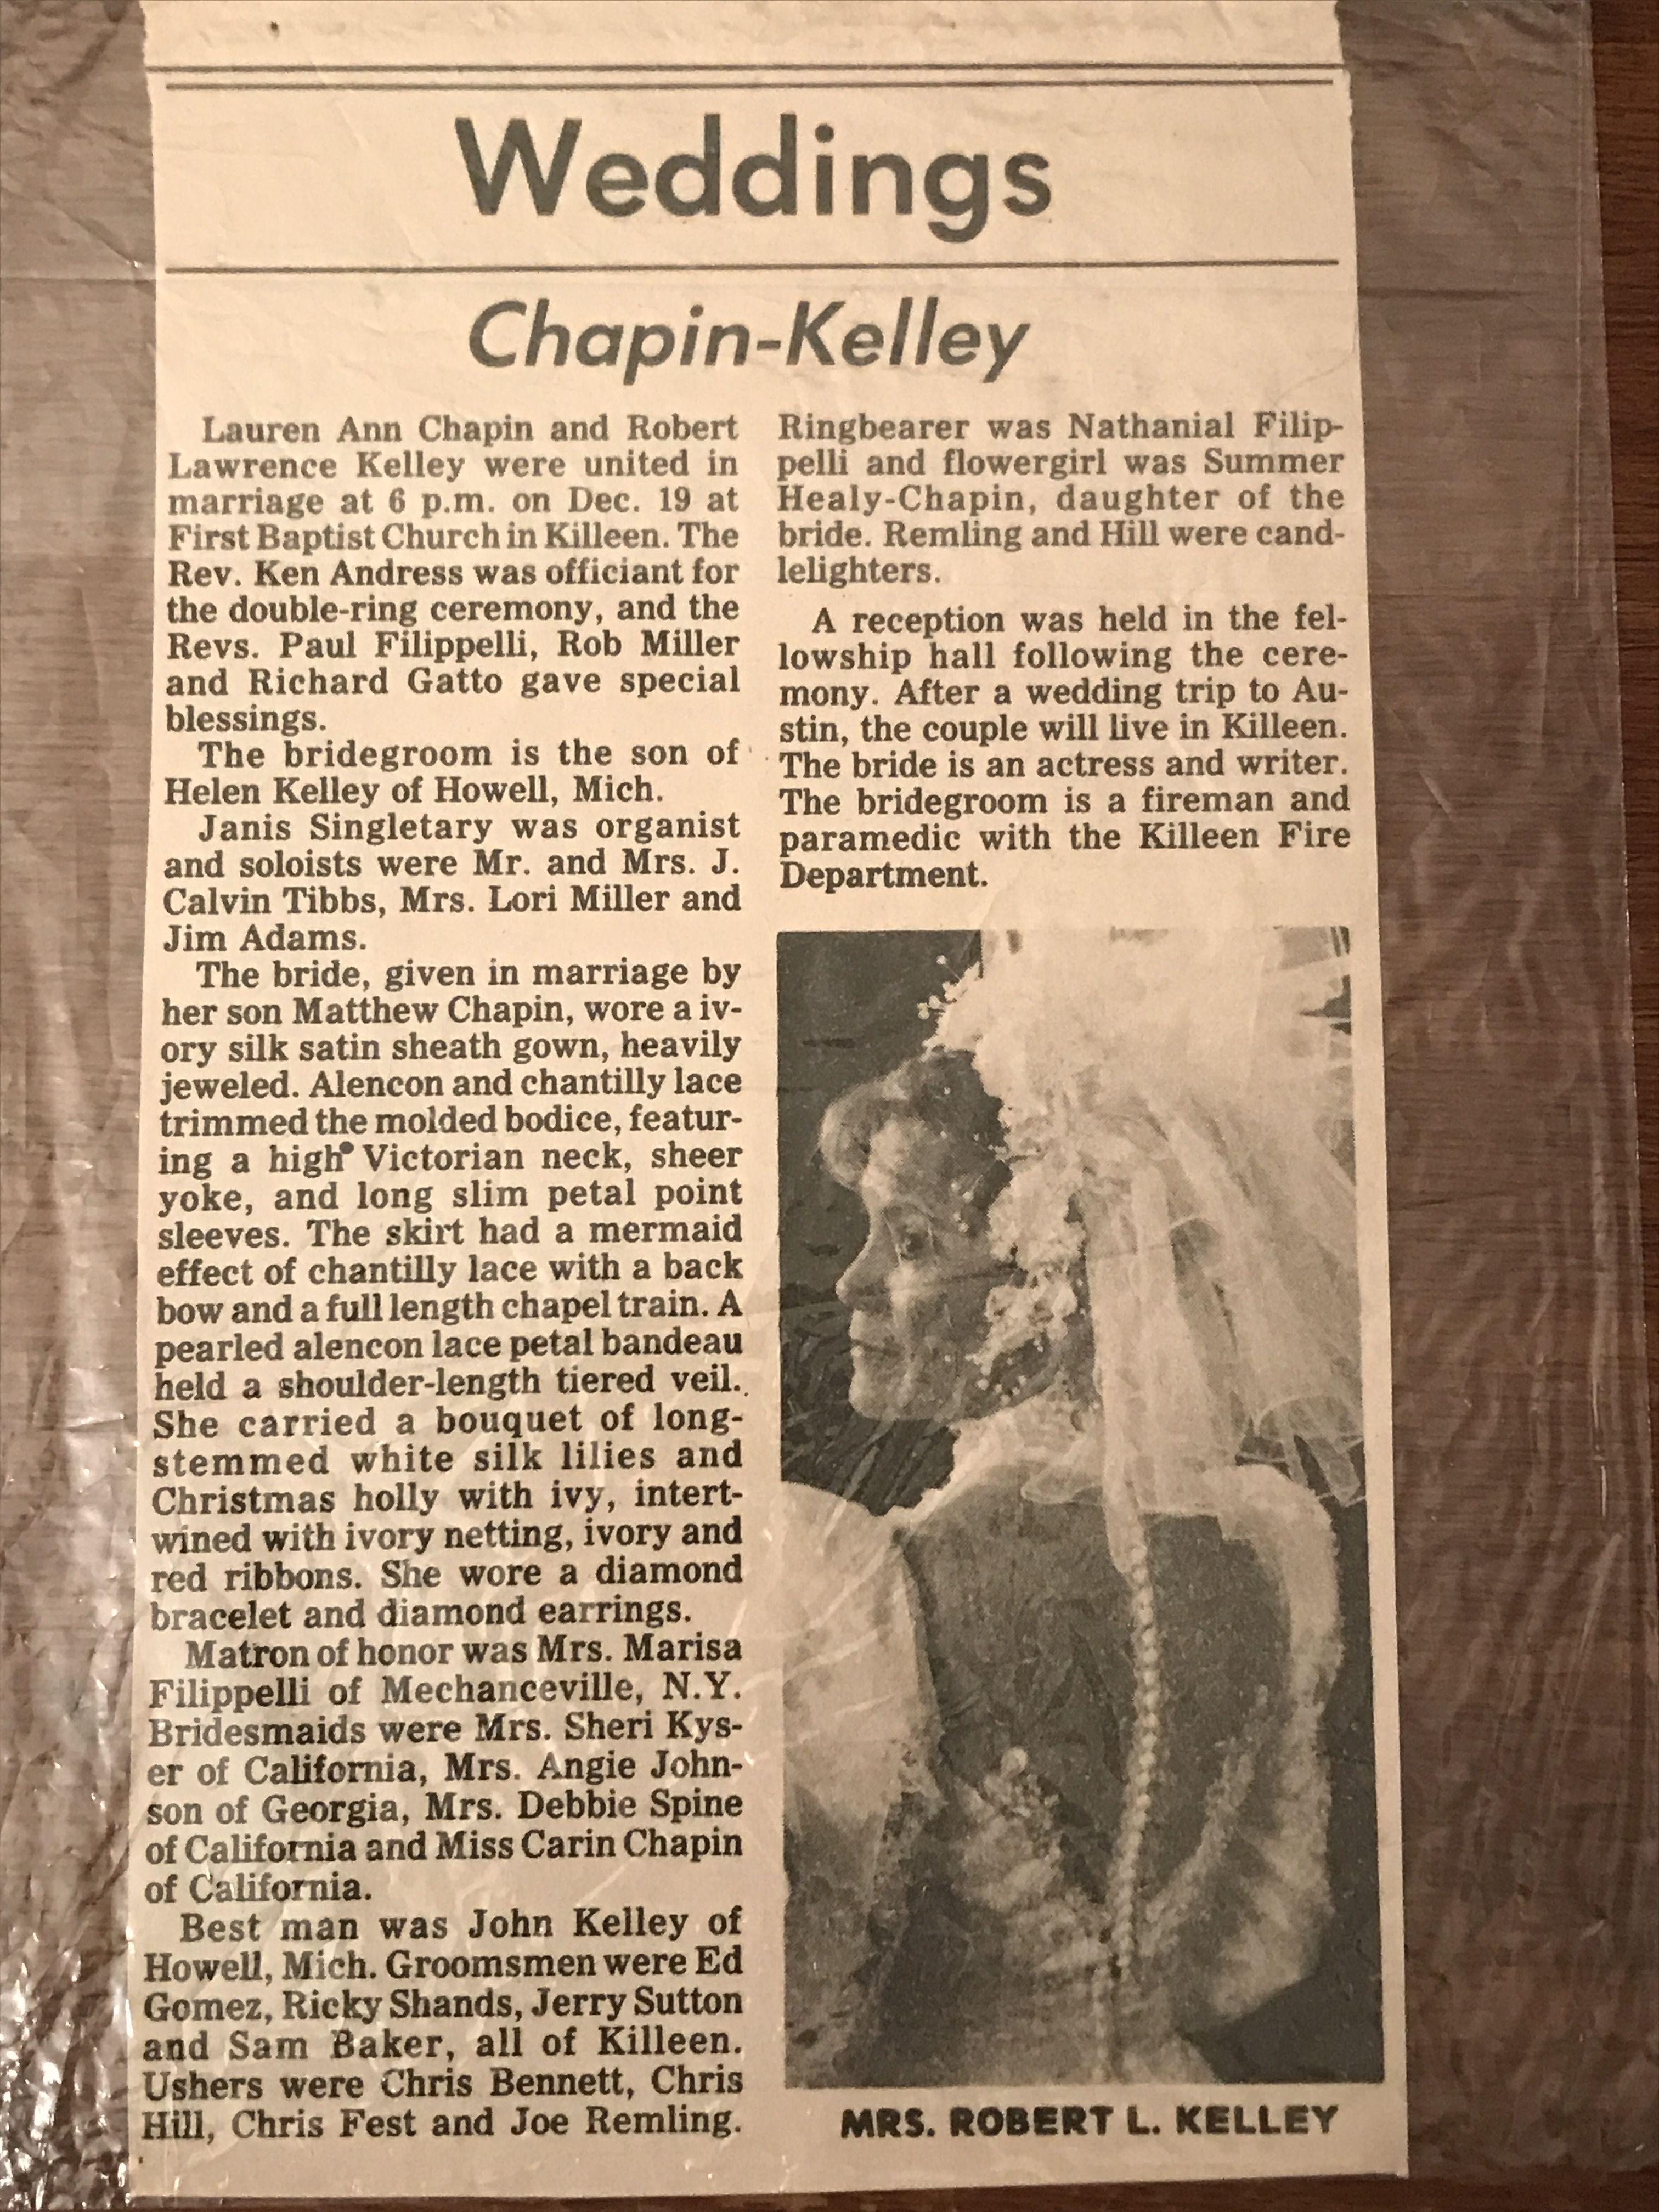 Christian Herald June 1989 featuring Lauren Chapin